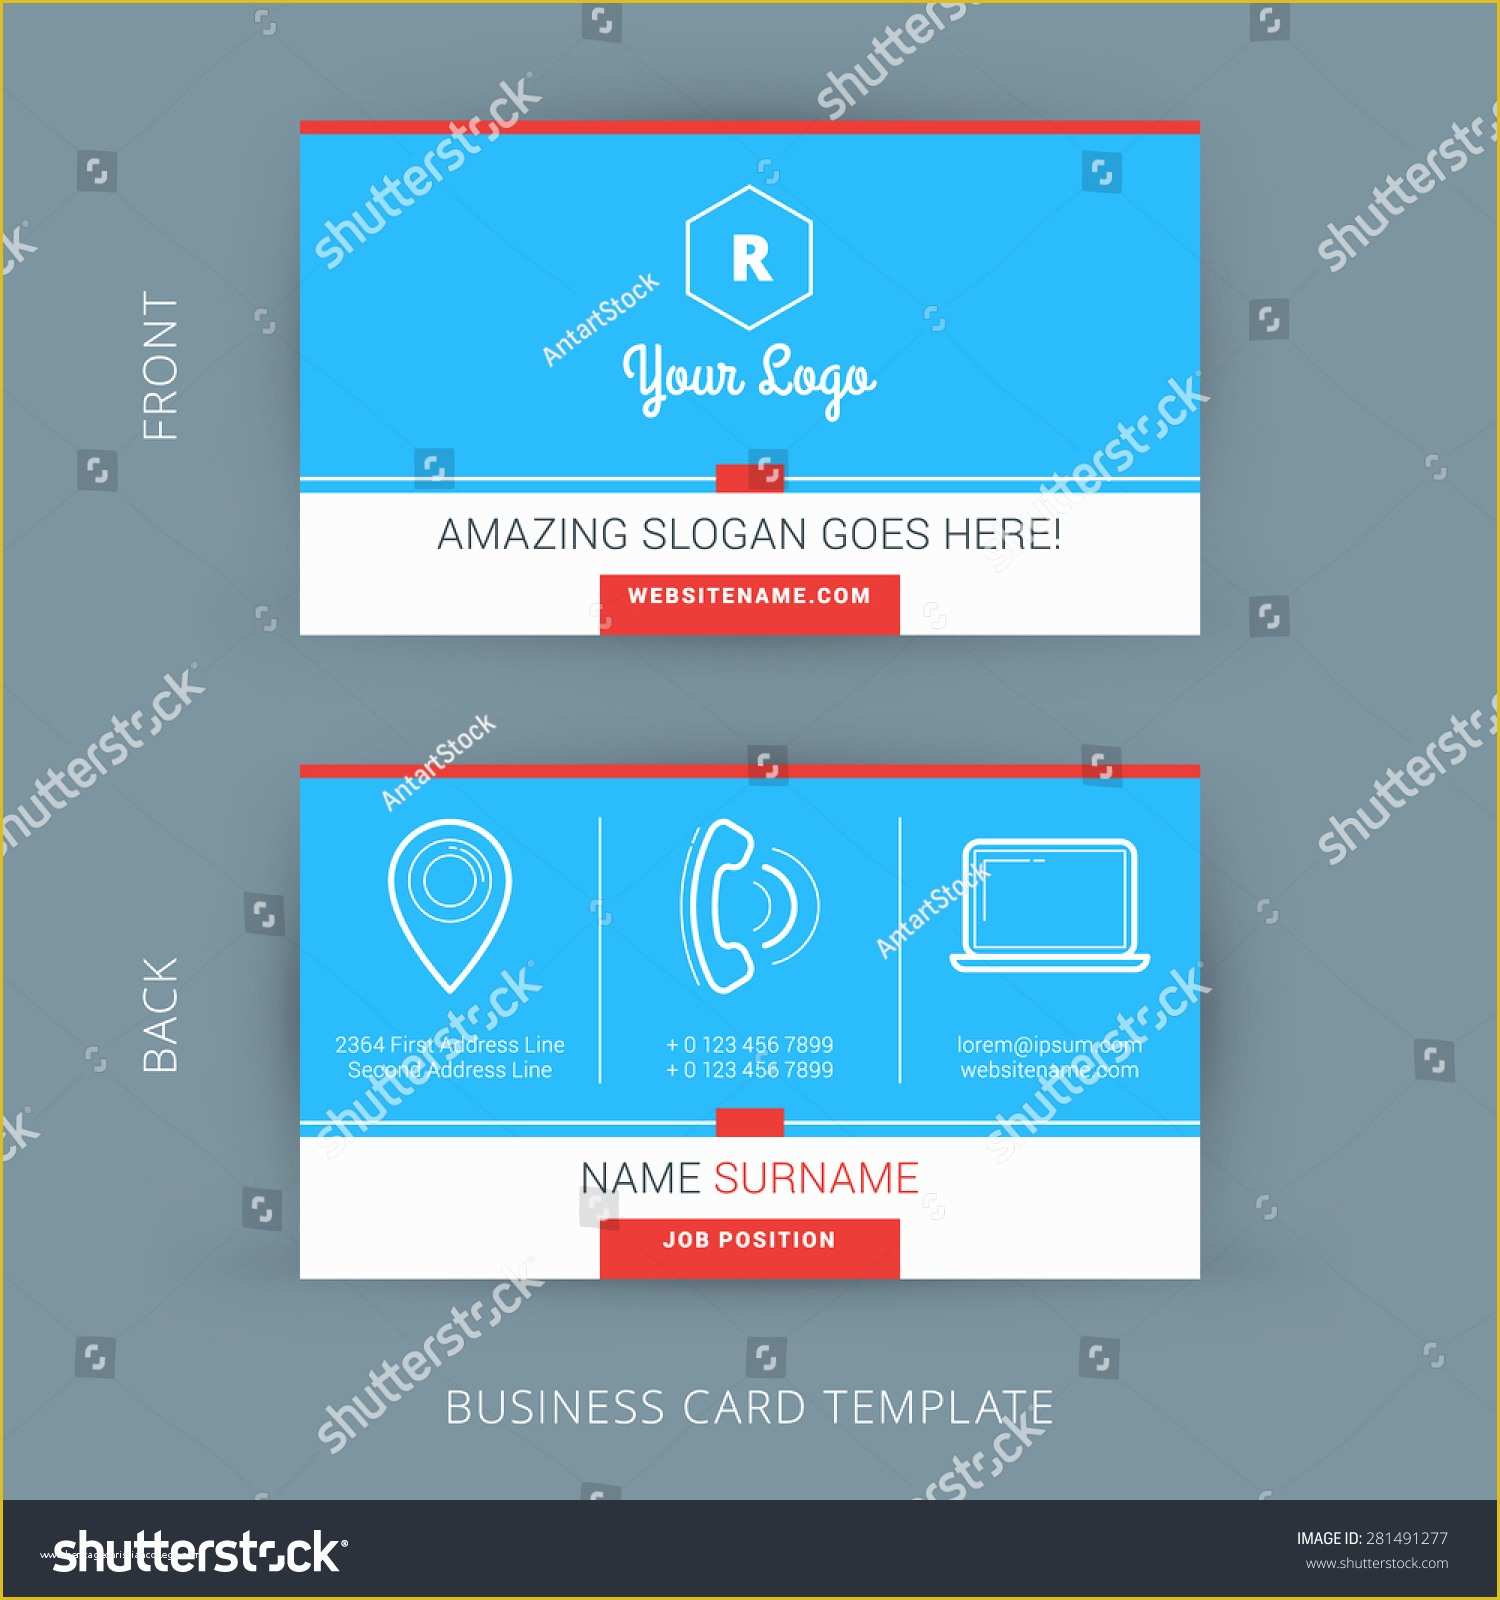 Business Card Website Template Free Of Website Business Card Template Business Card Design